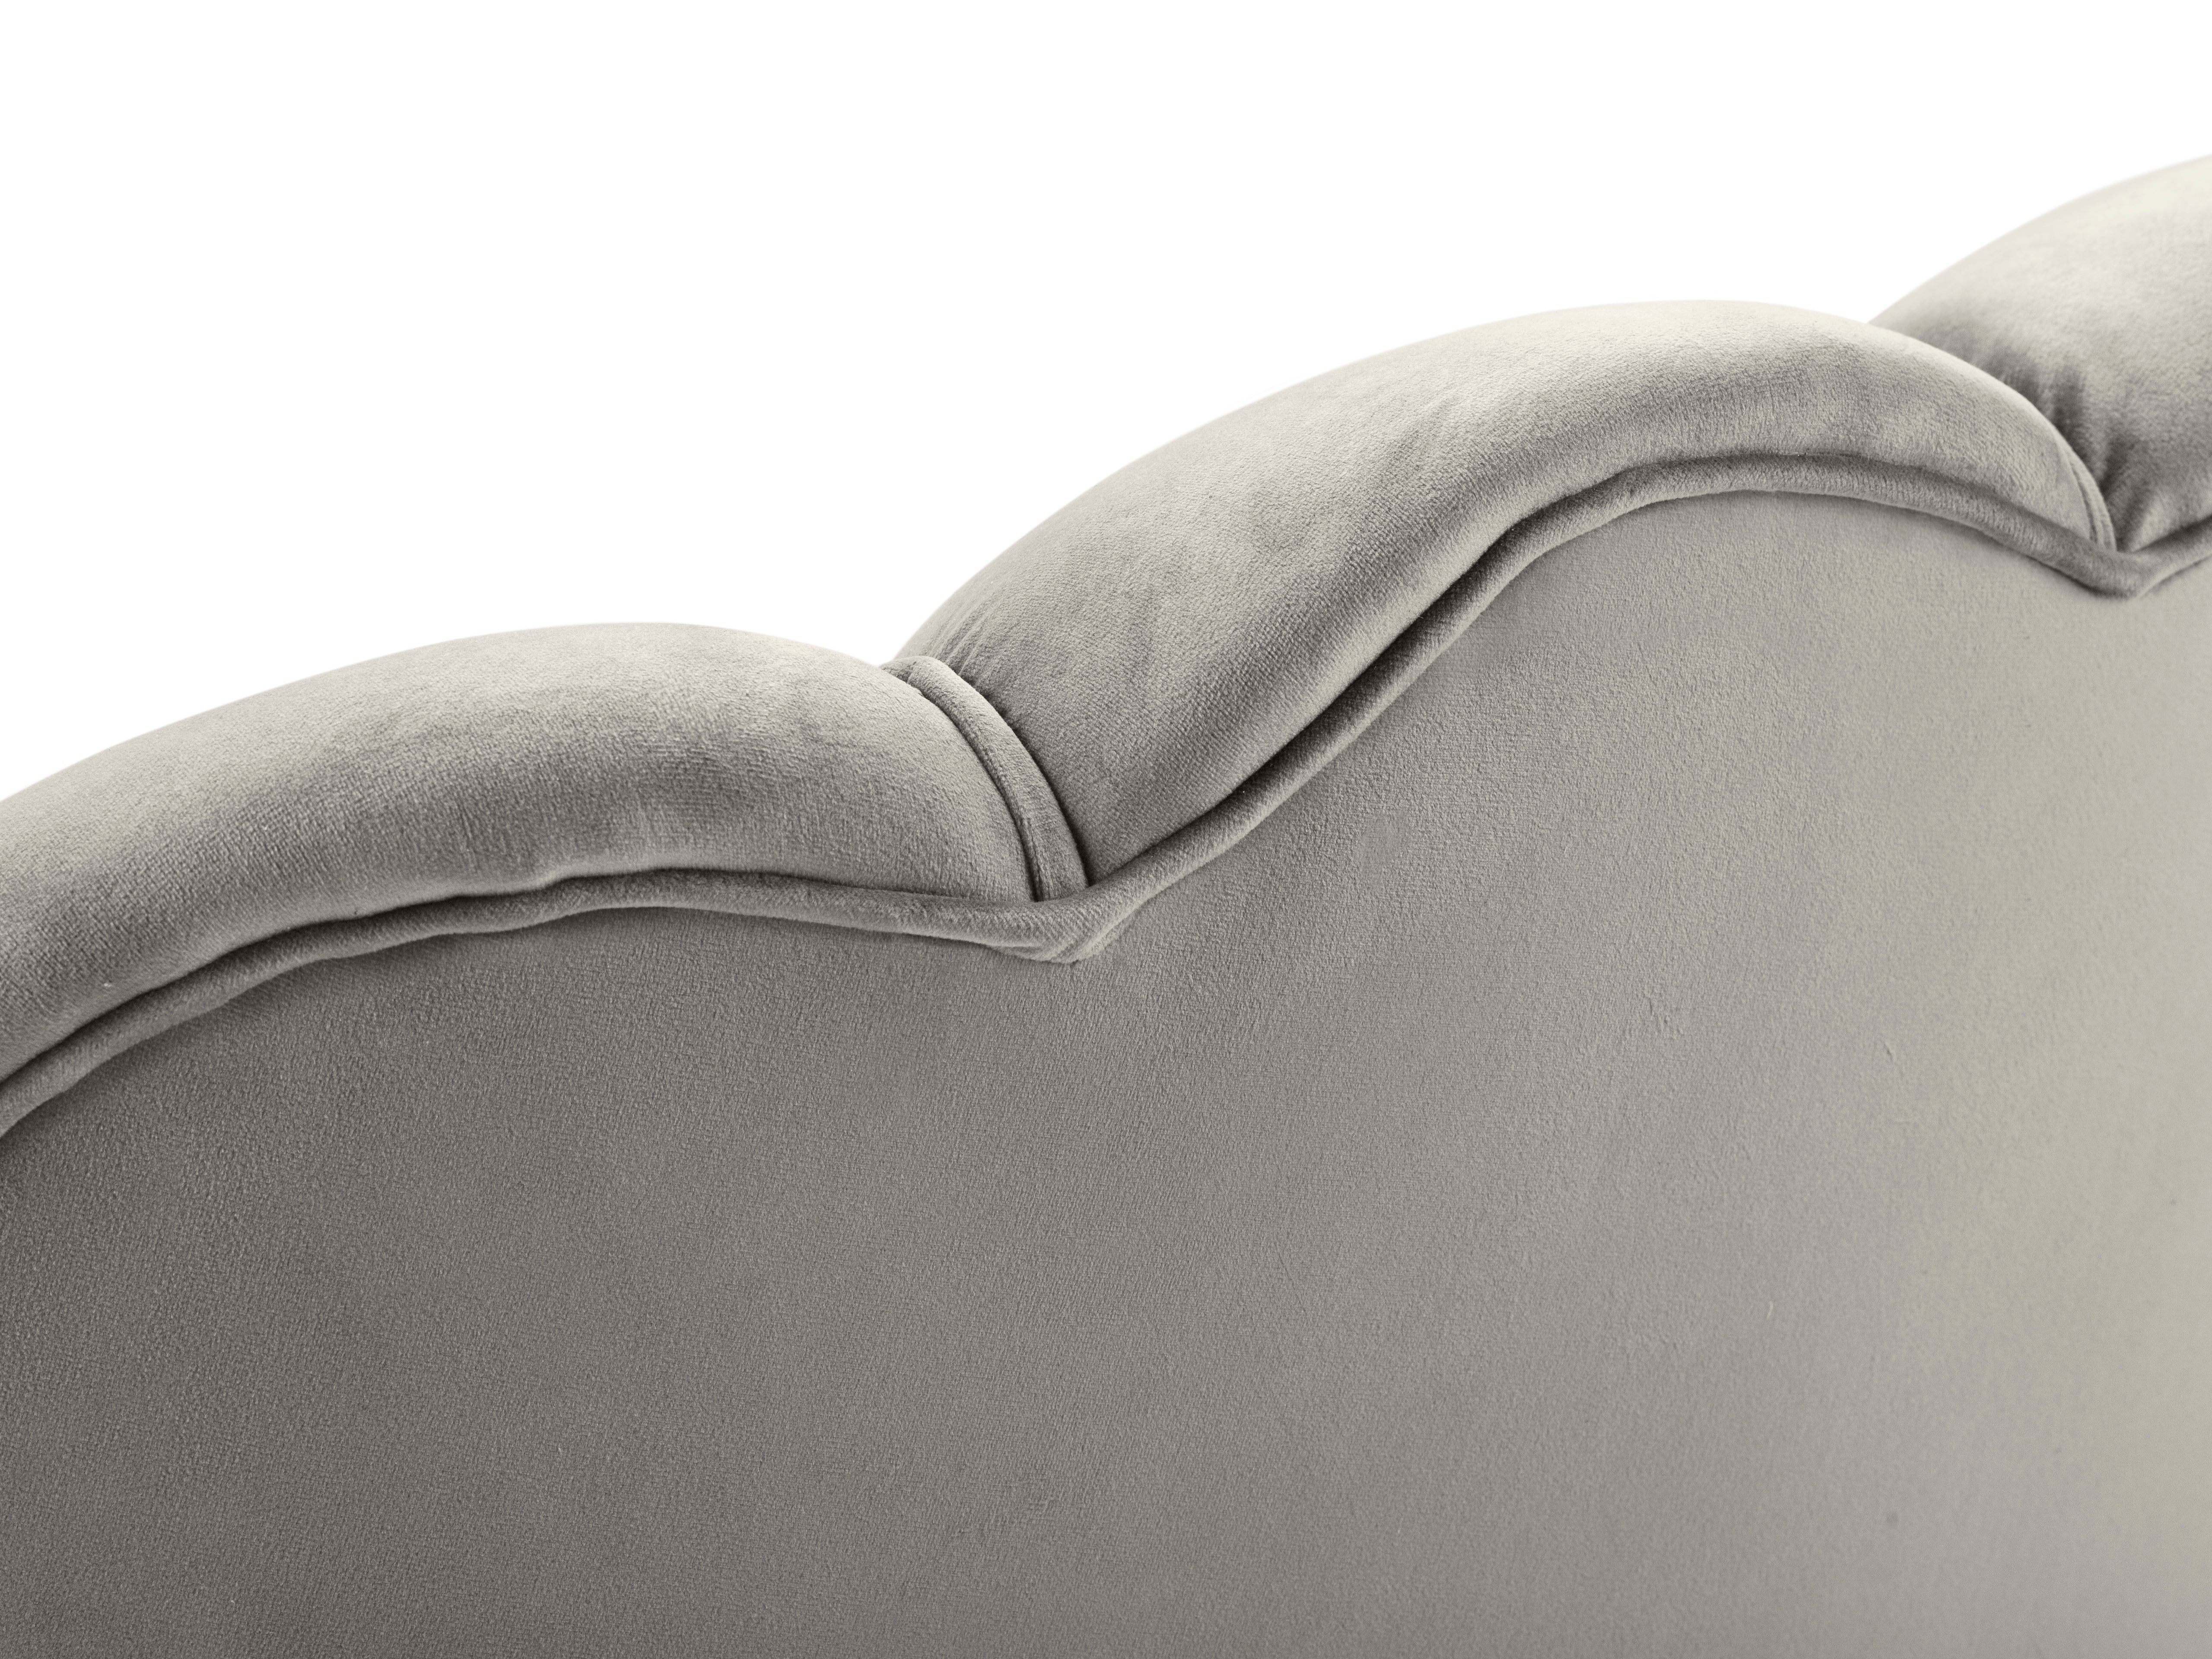 VARENNE velvet armchair in dark beige with silver base